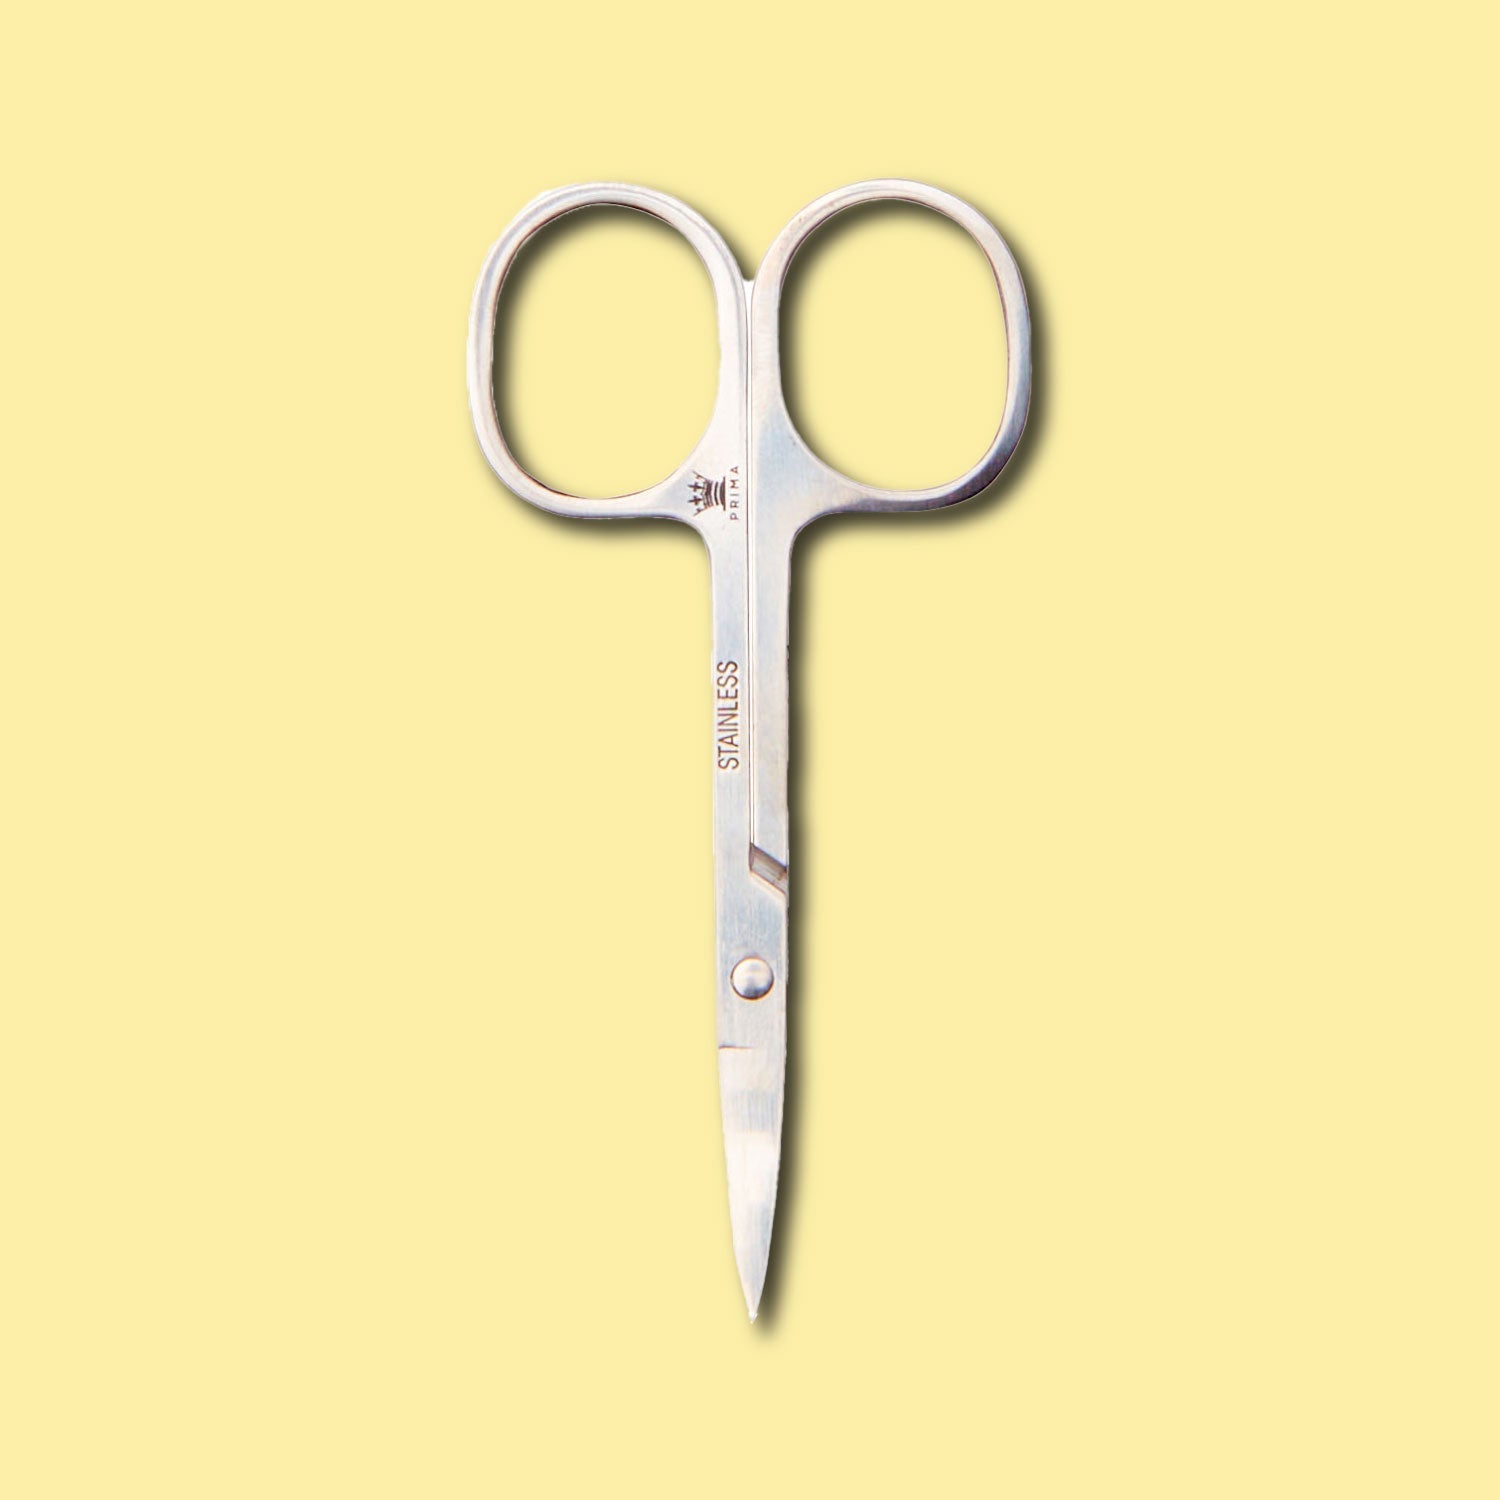 prima lash scissors unpacked yellow background